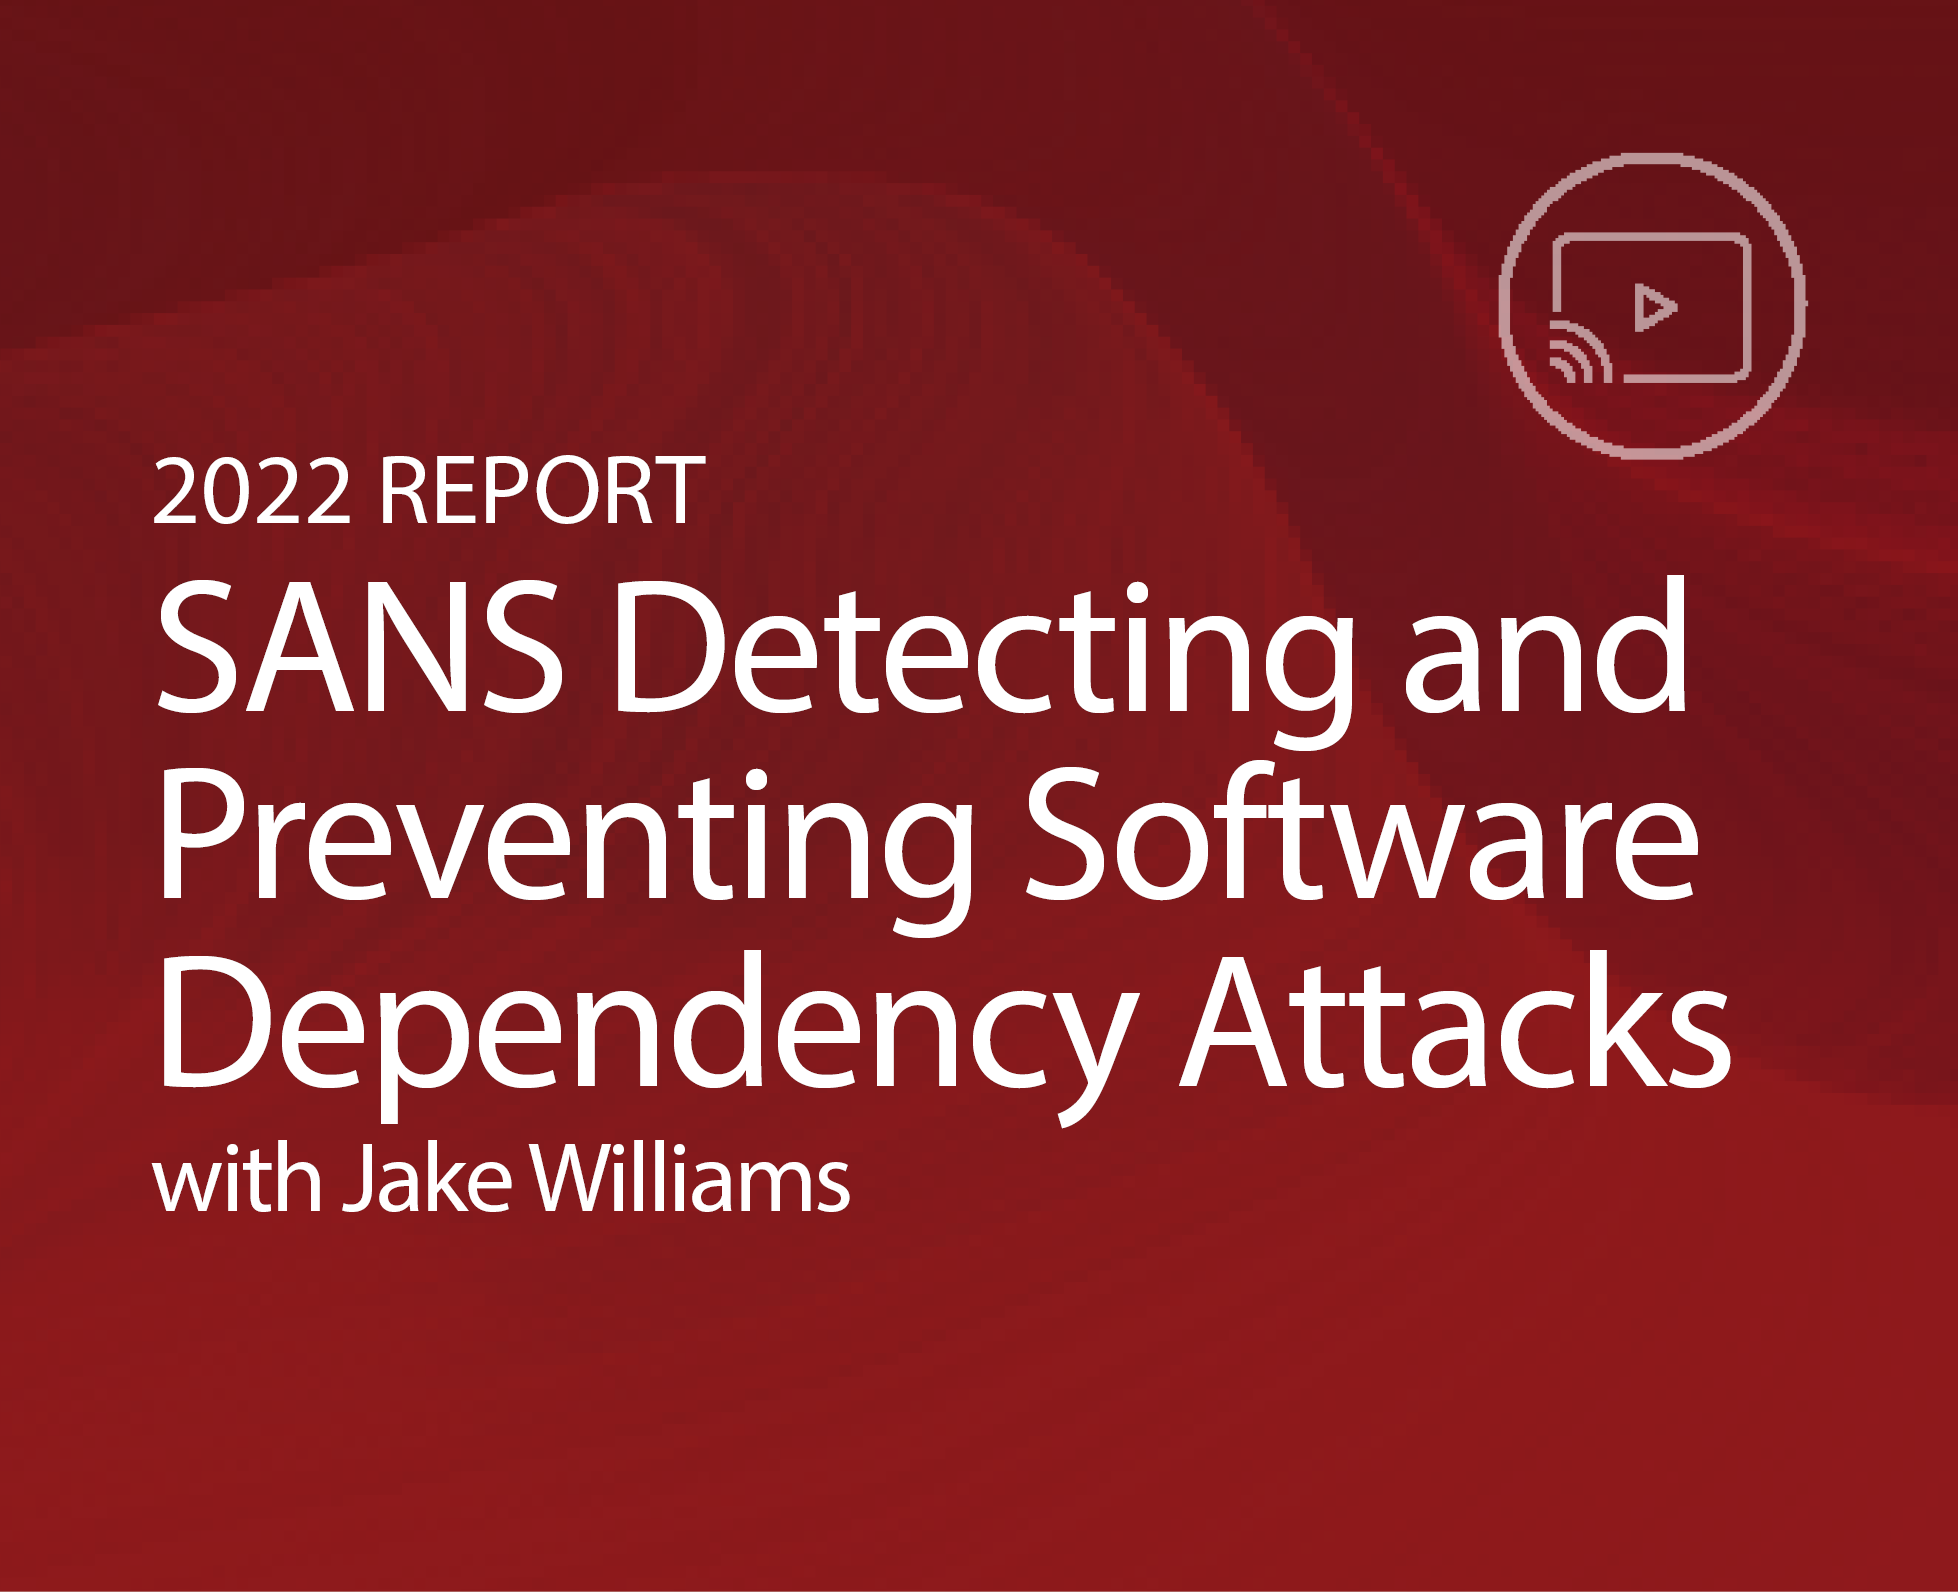 SANS_Dependency_Attacks_Report.png